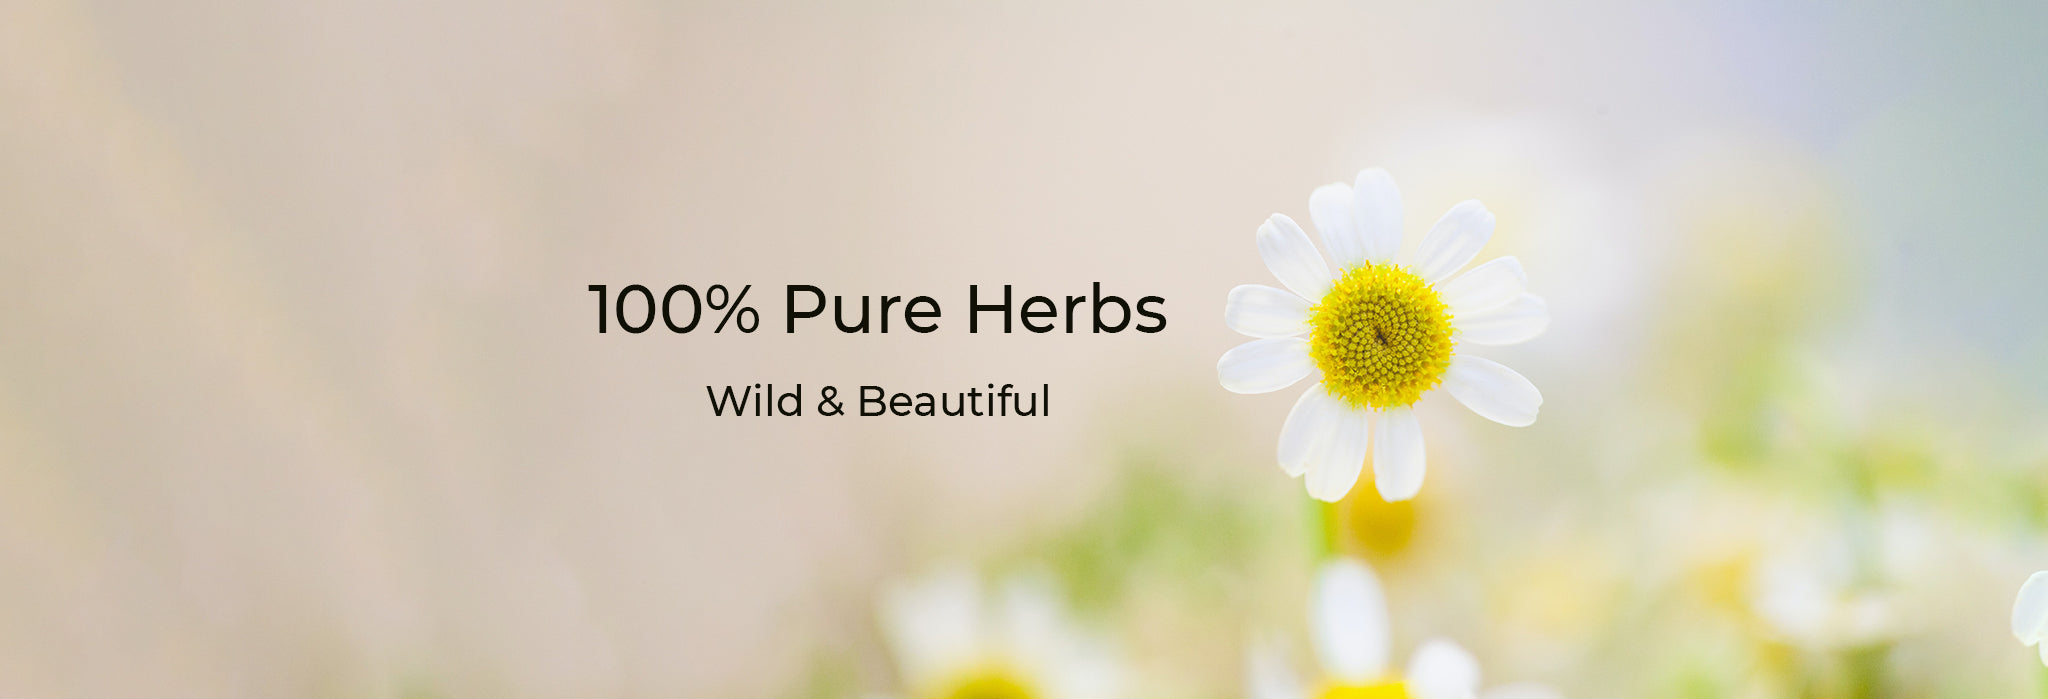 teabetea herbs, pure herbs